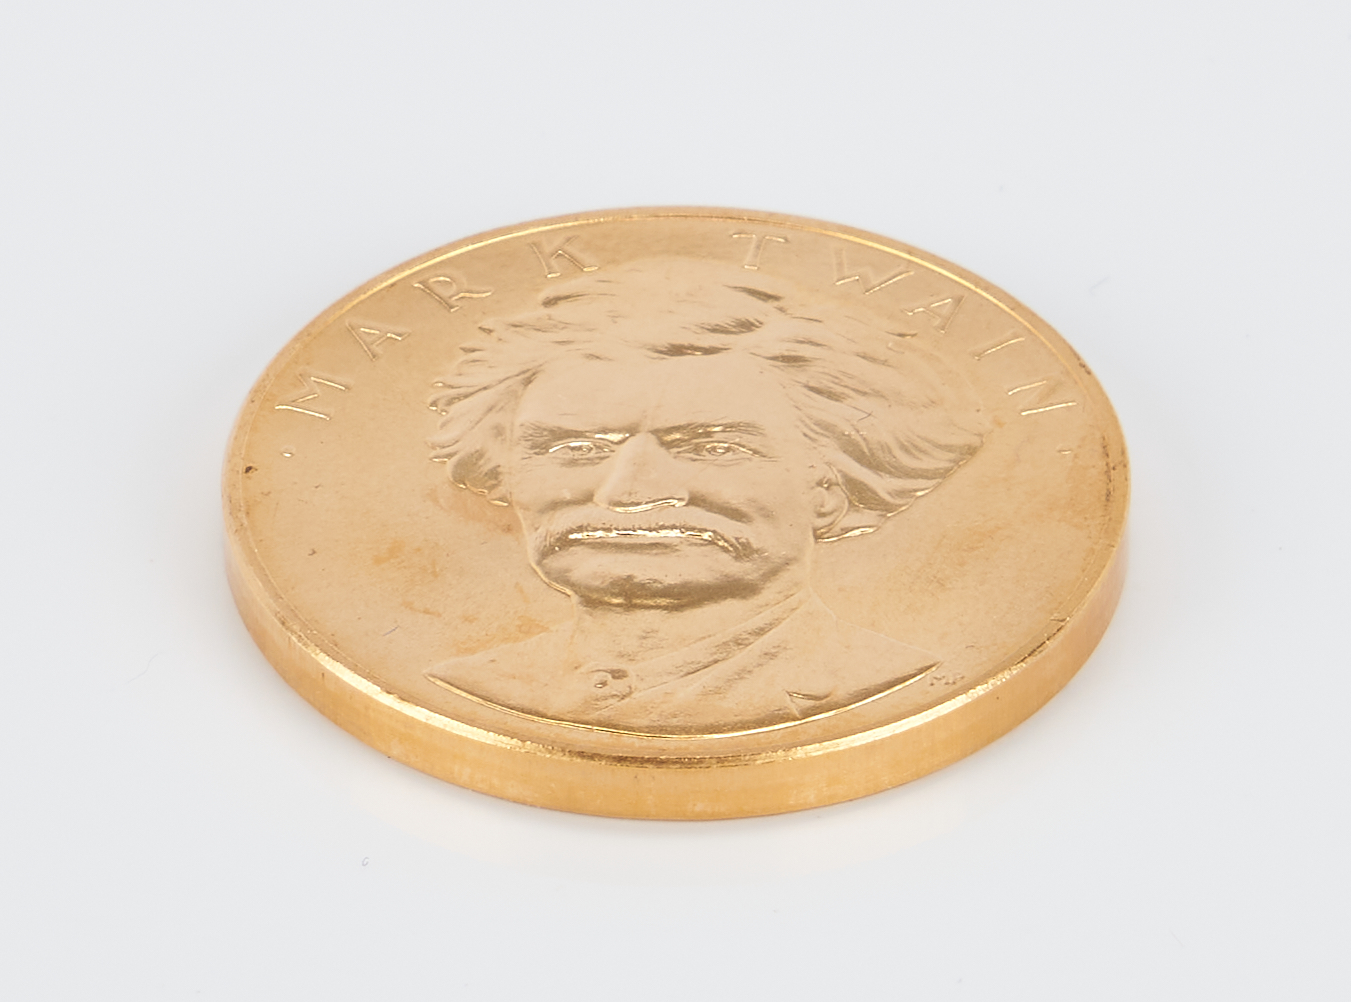 Lot 732: 1981 Mark Twain American Arts Gold Medallion